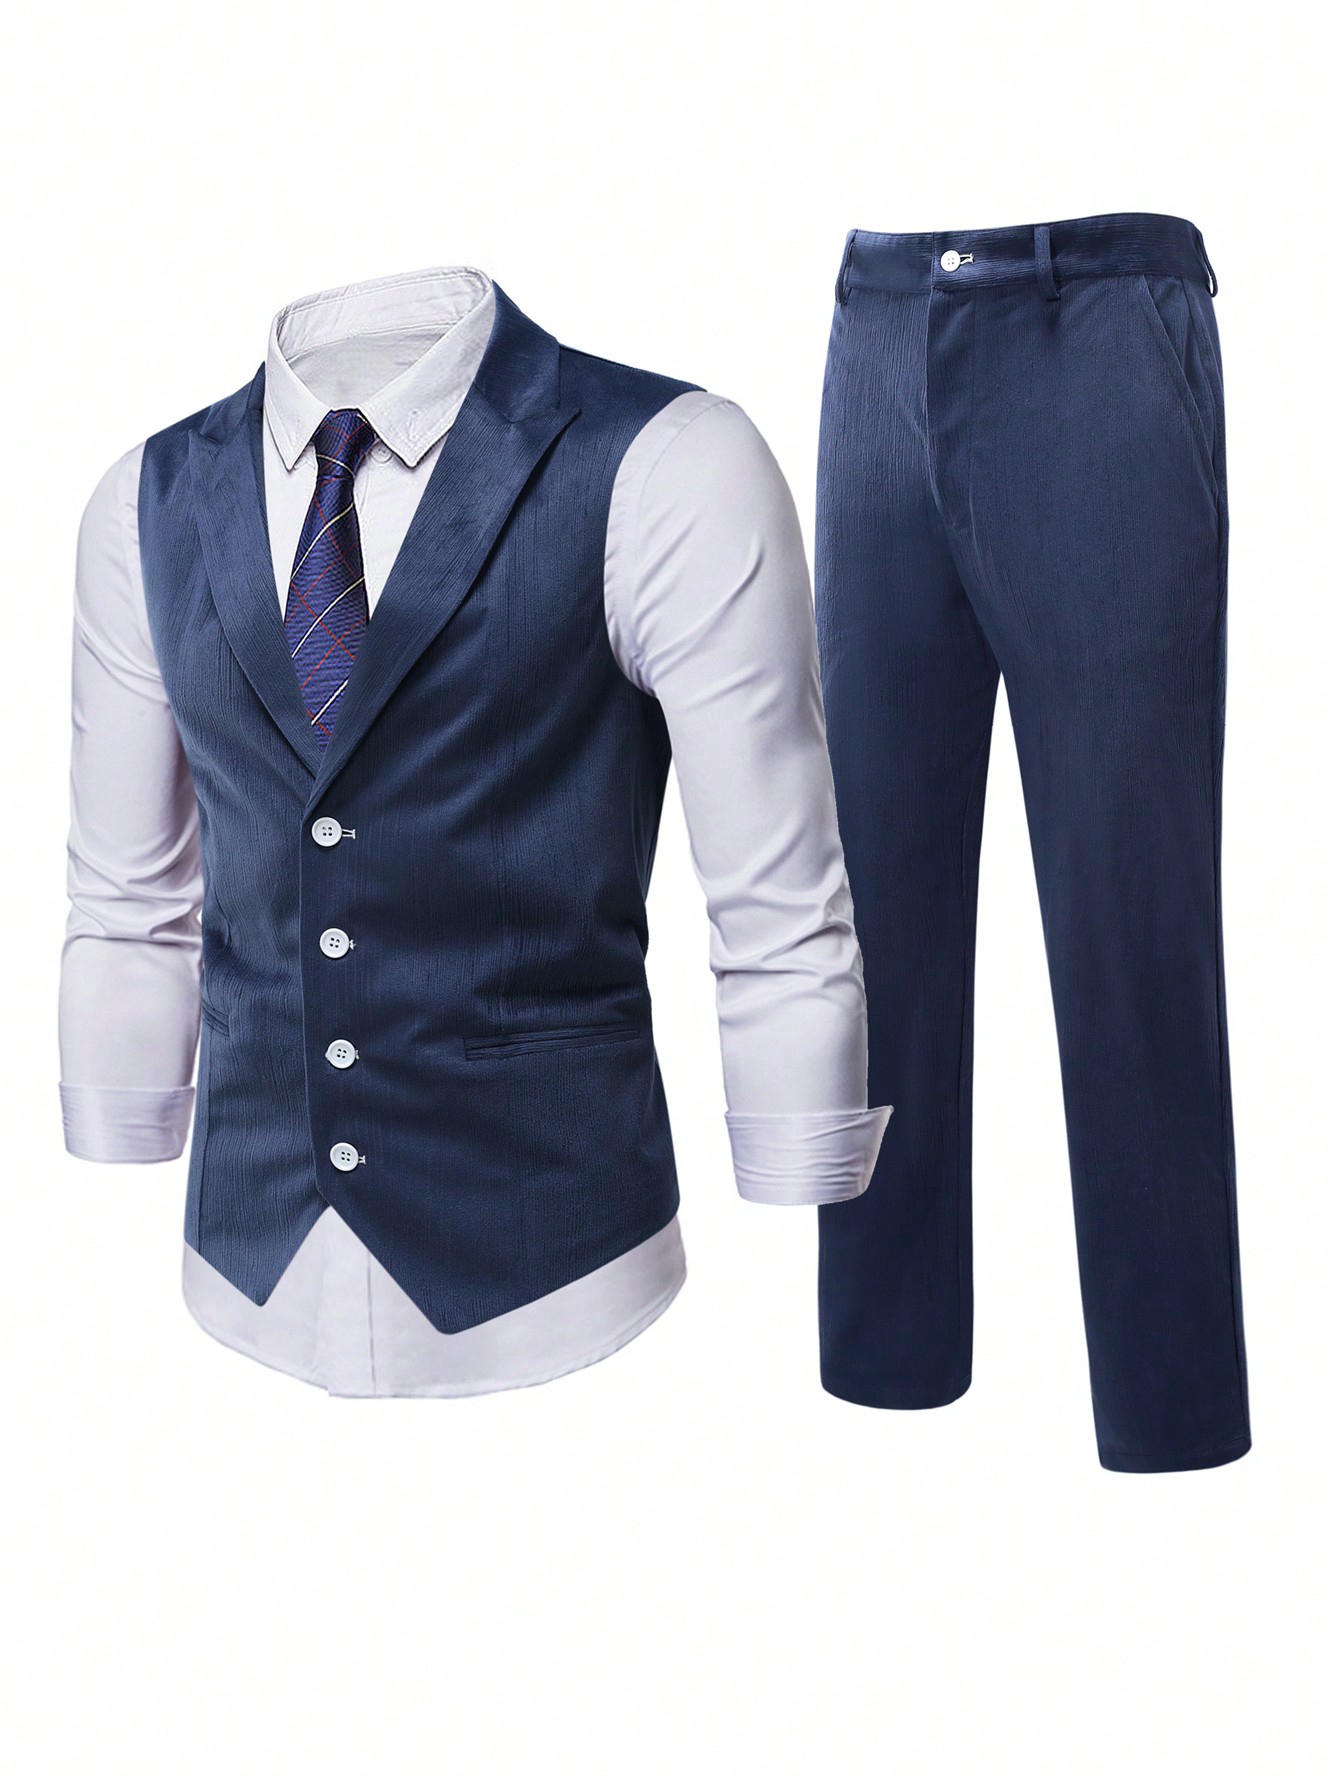 Мужской комплект из жилета, рубашки и брюк Manfinity Mode, темно-синий